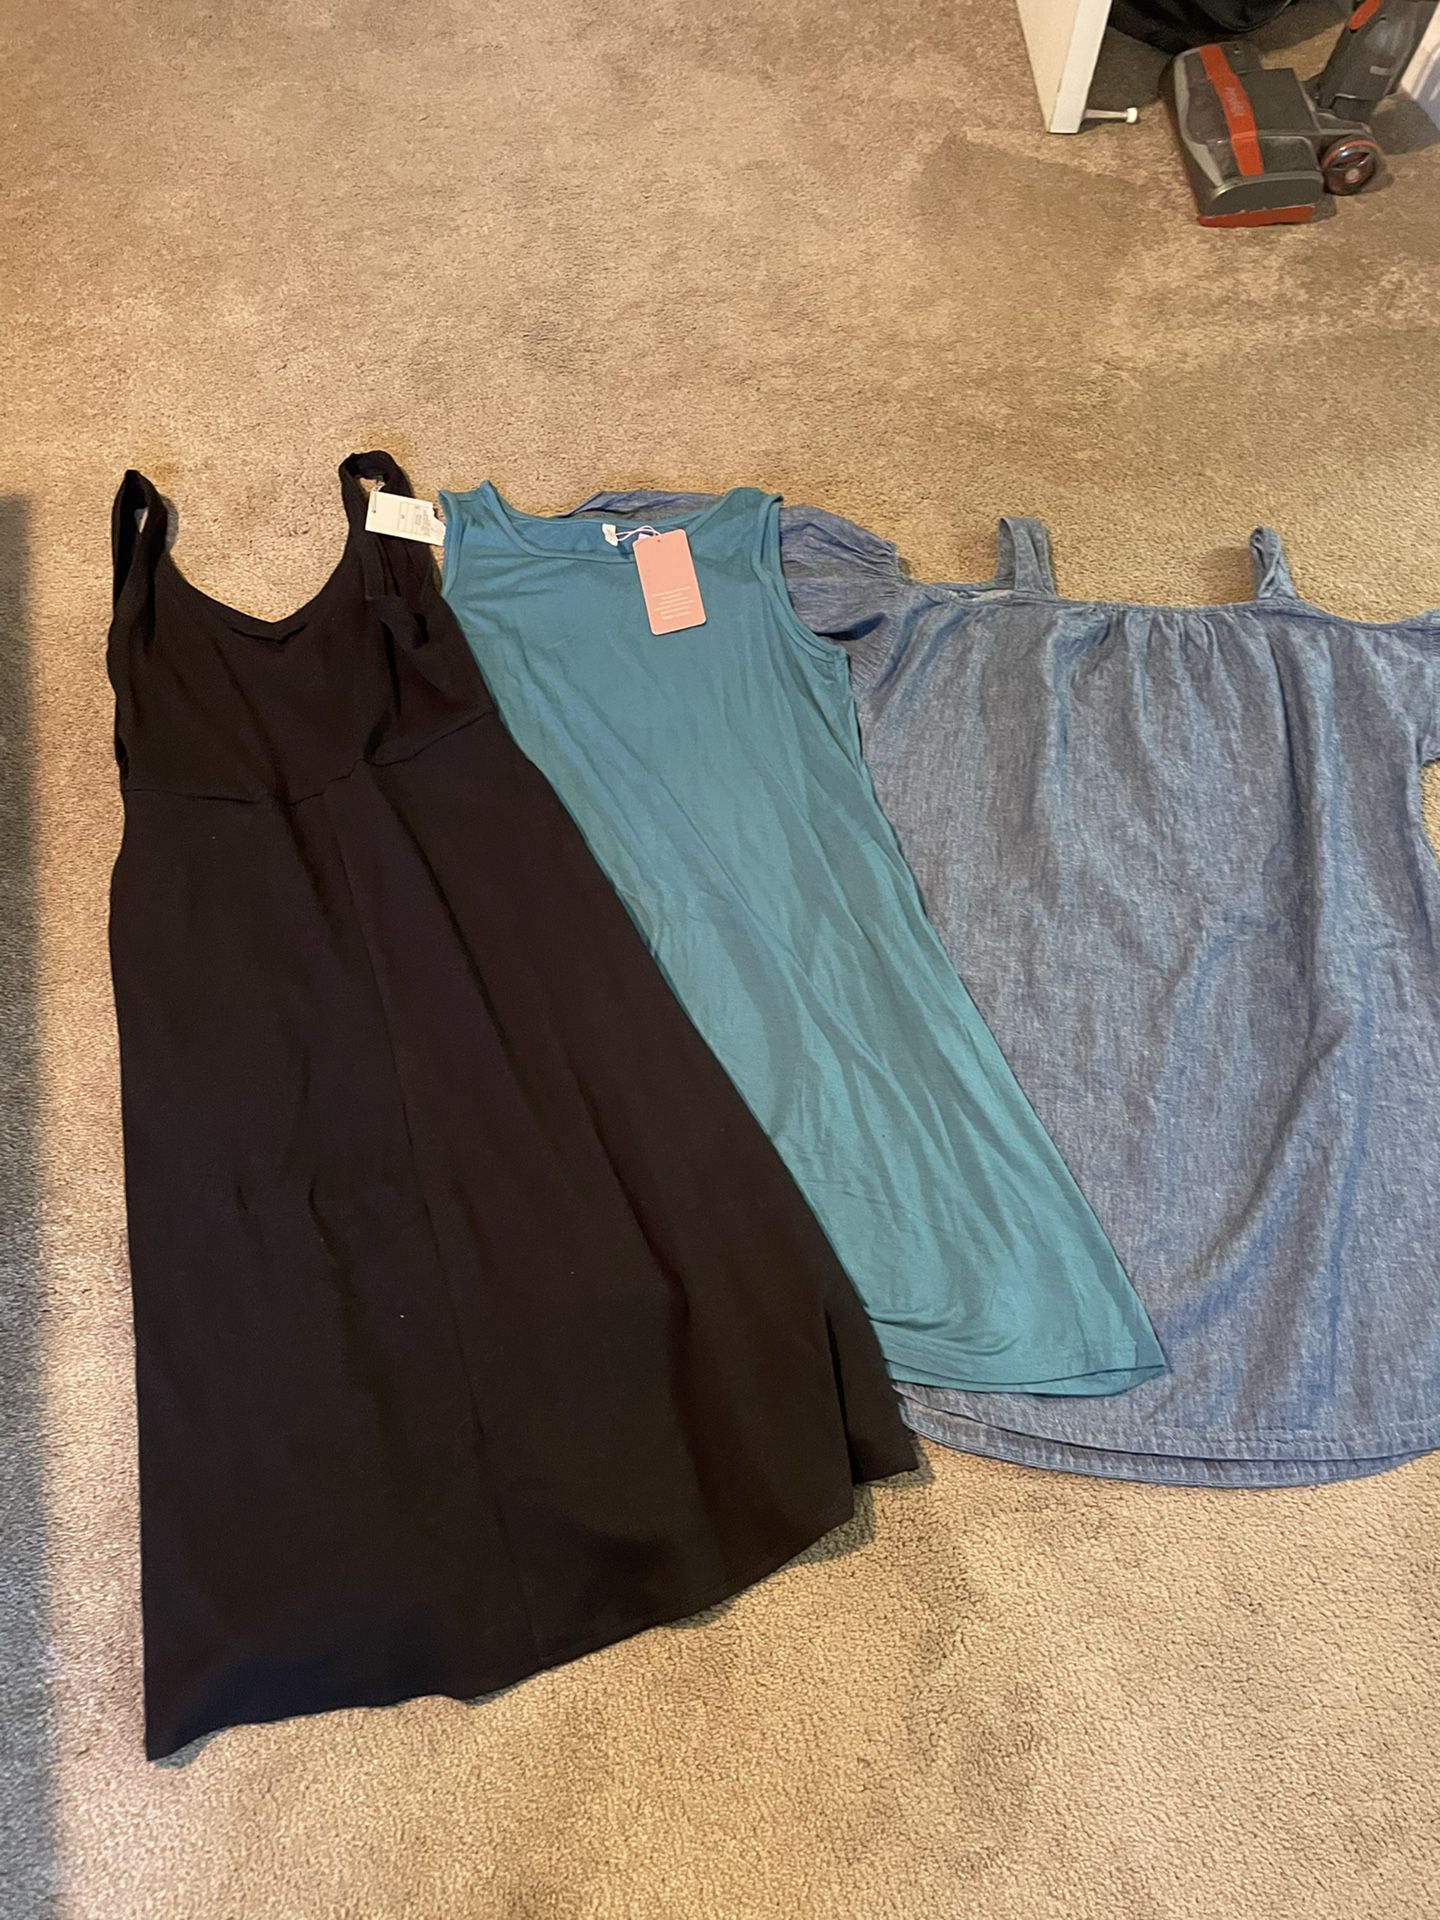 3 dresses size medium women’s